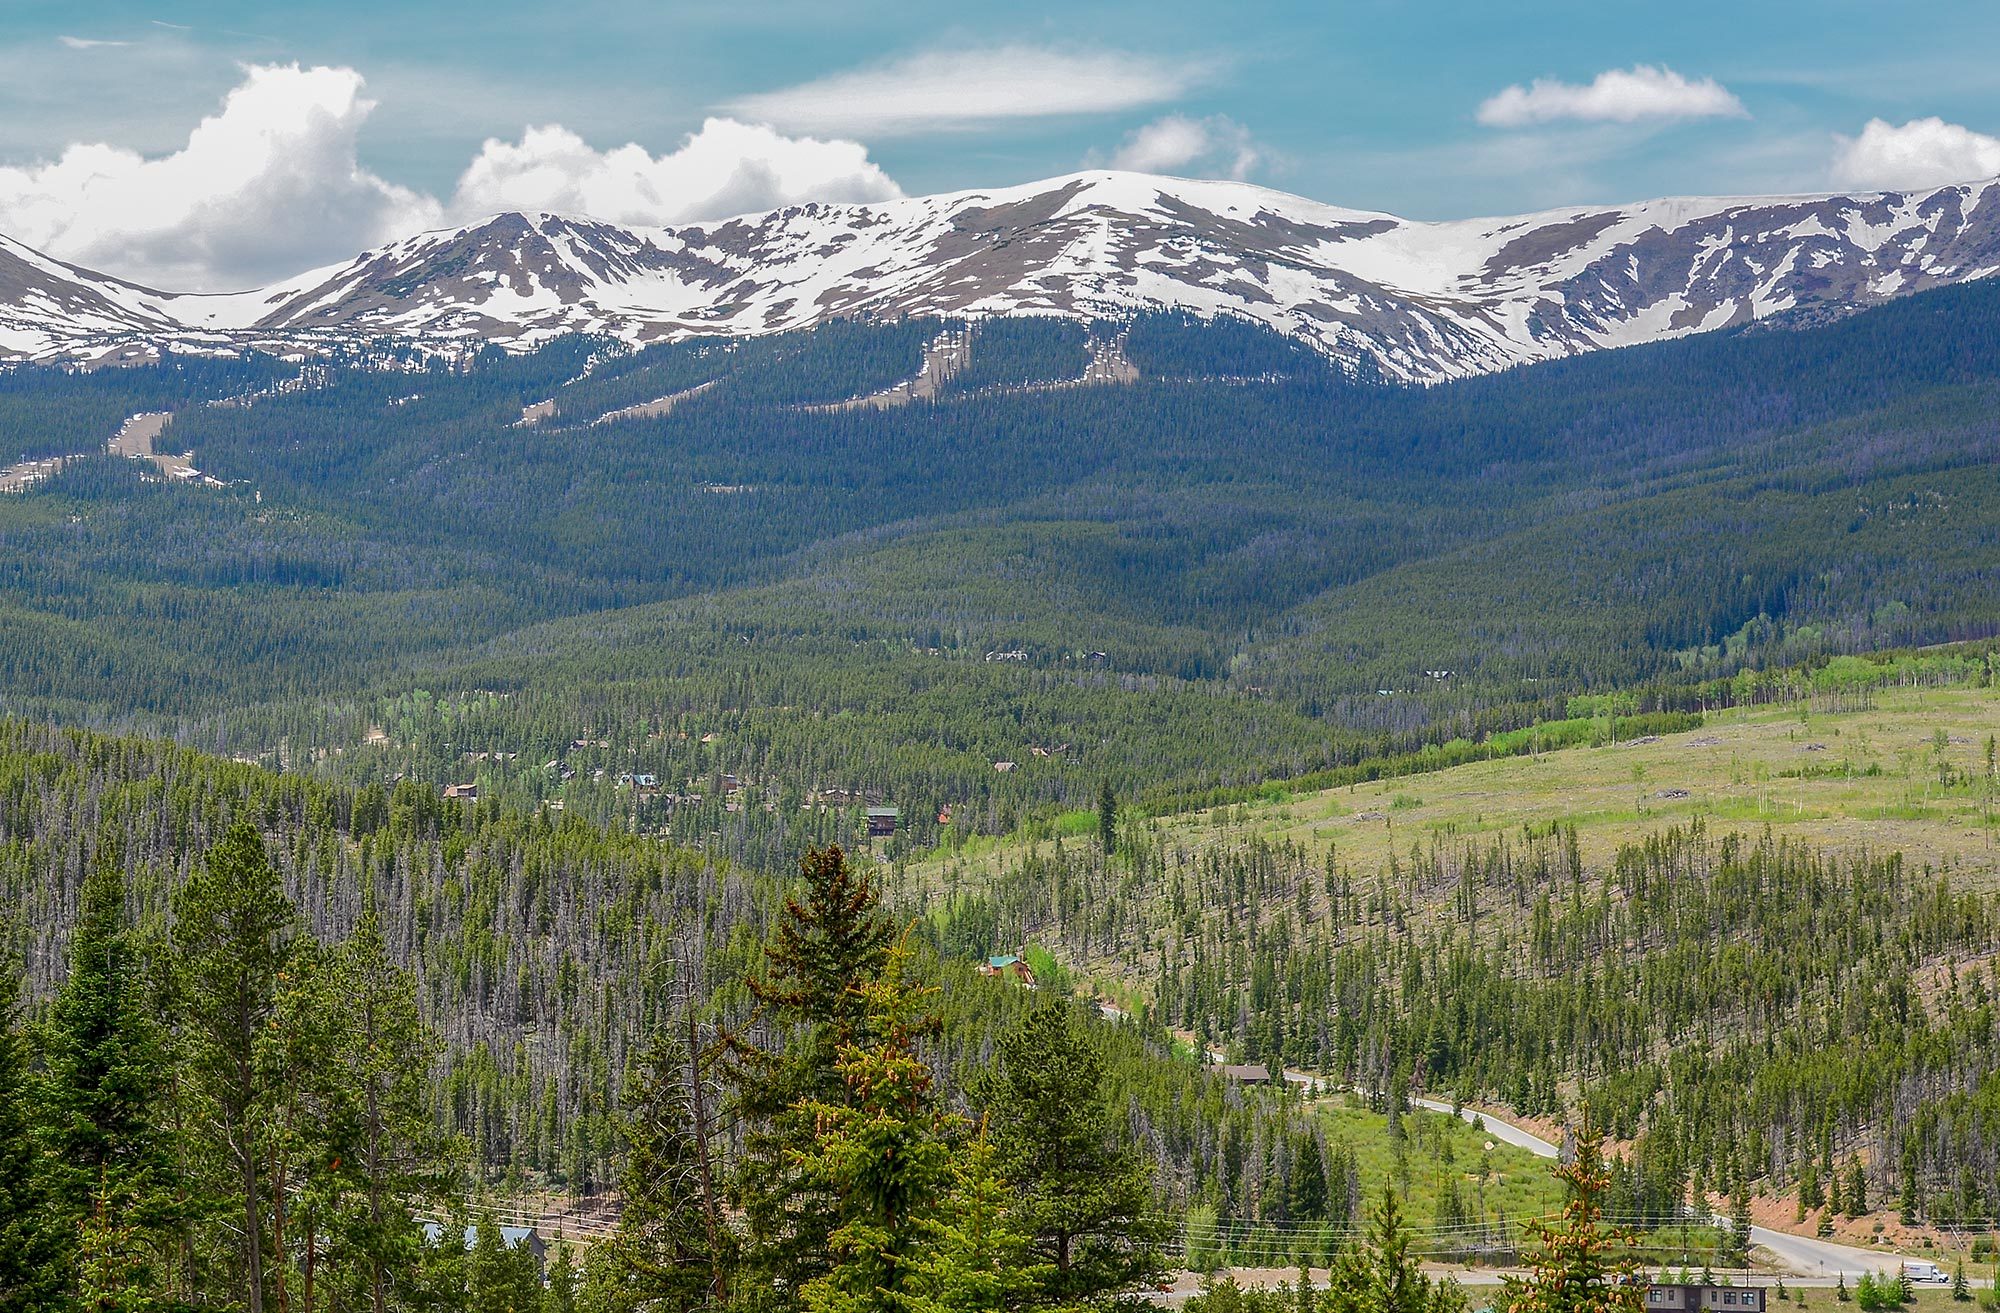 Peak 7 in Breckenridge Colorado as seen from across the valley